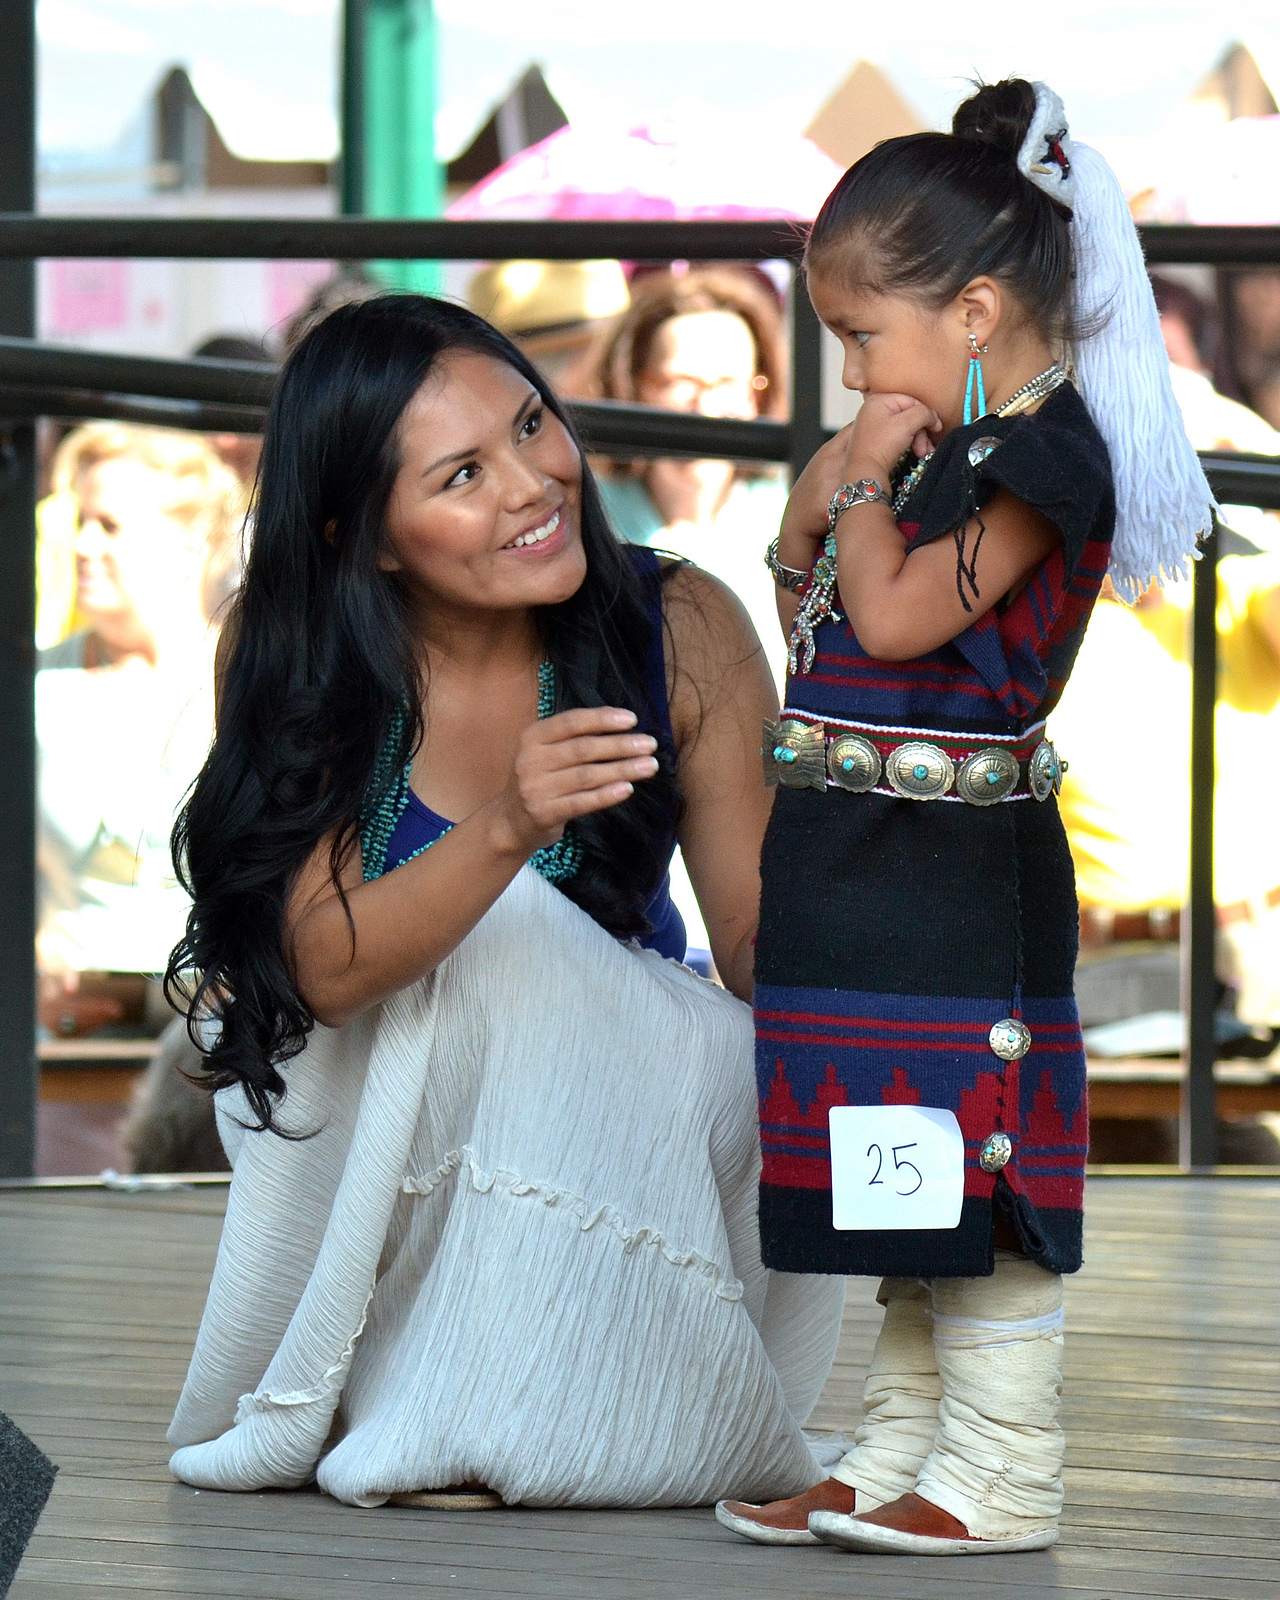 native american clothing13 Native American Clothing Contest at Santa Fe Indian Market